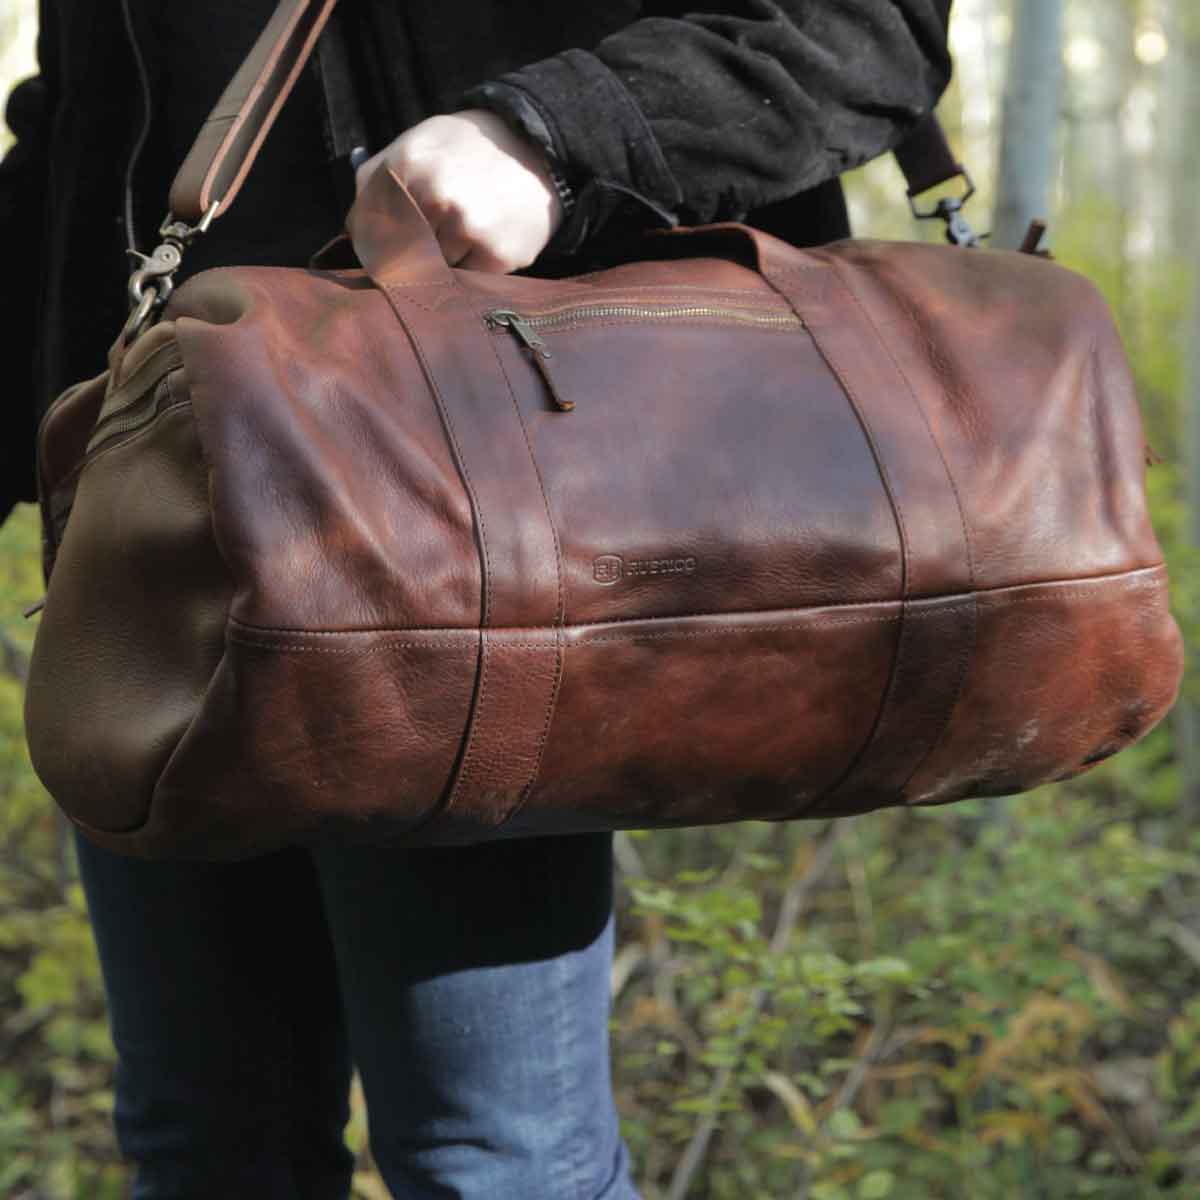 Theodore Leather Duffle Bag